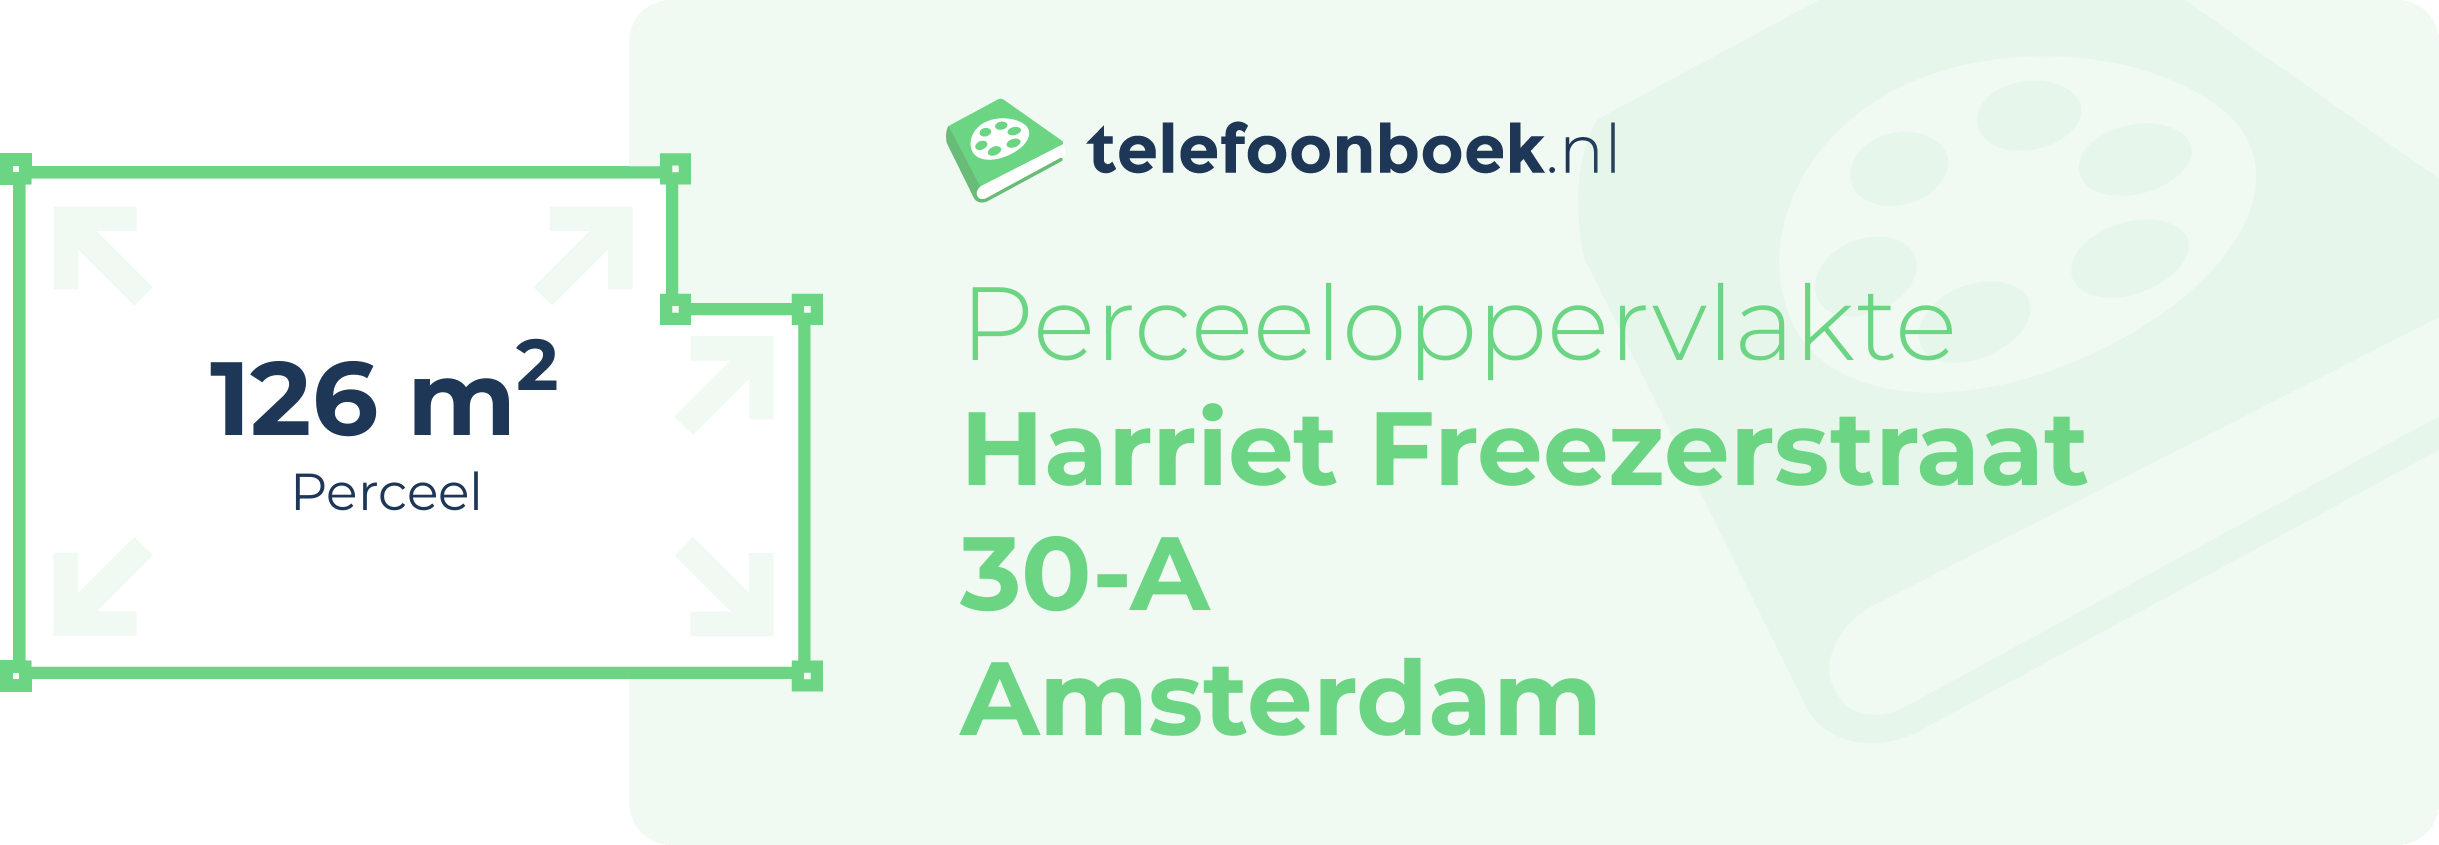 Perceeloppervlakte Harriet Freezerstraat 30-A Amsterdam